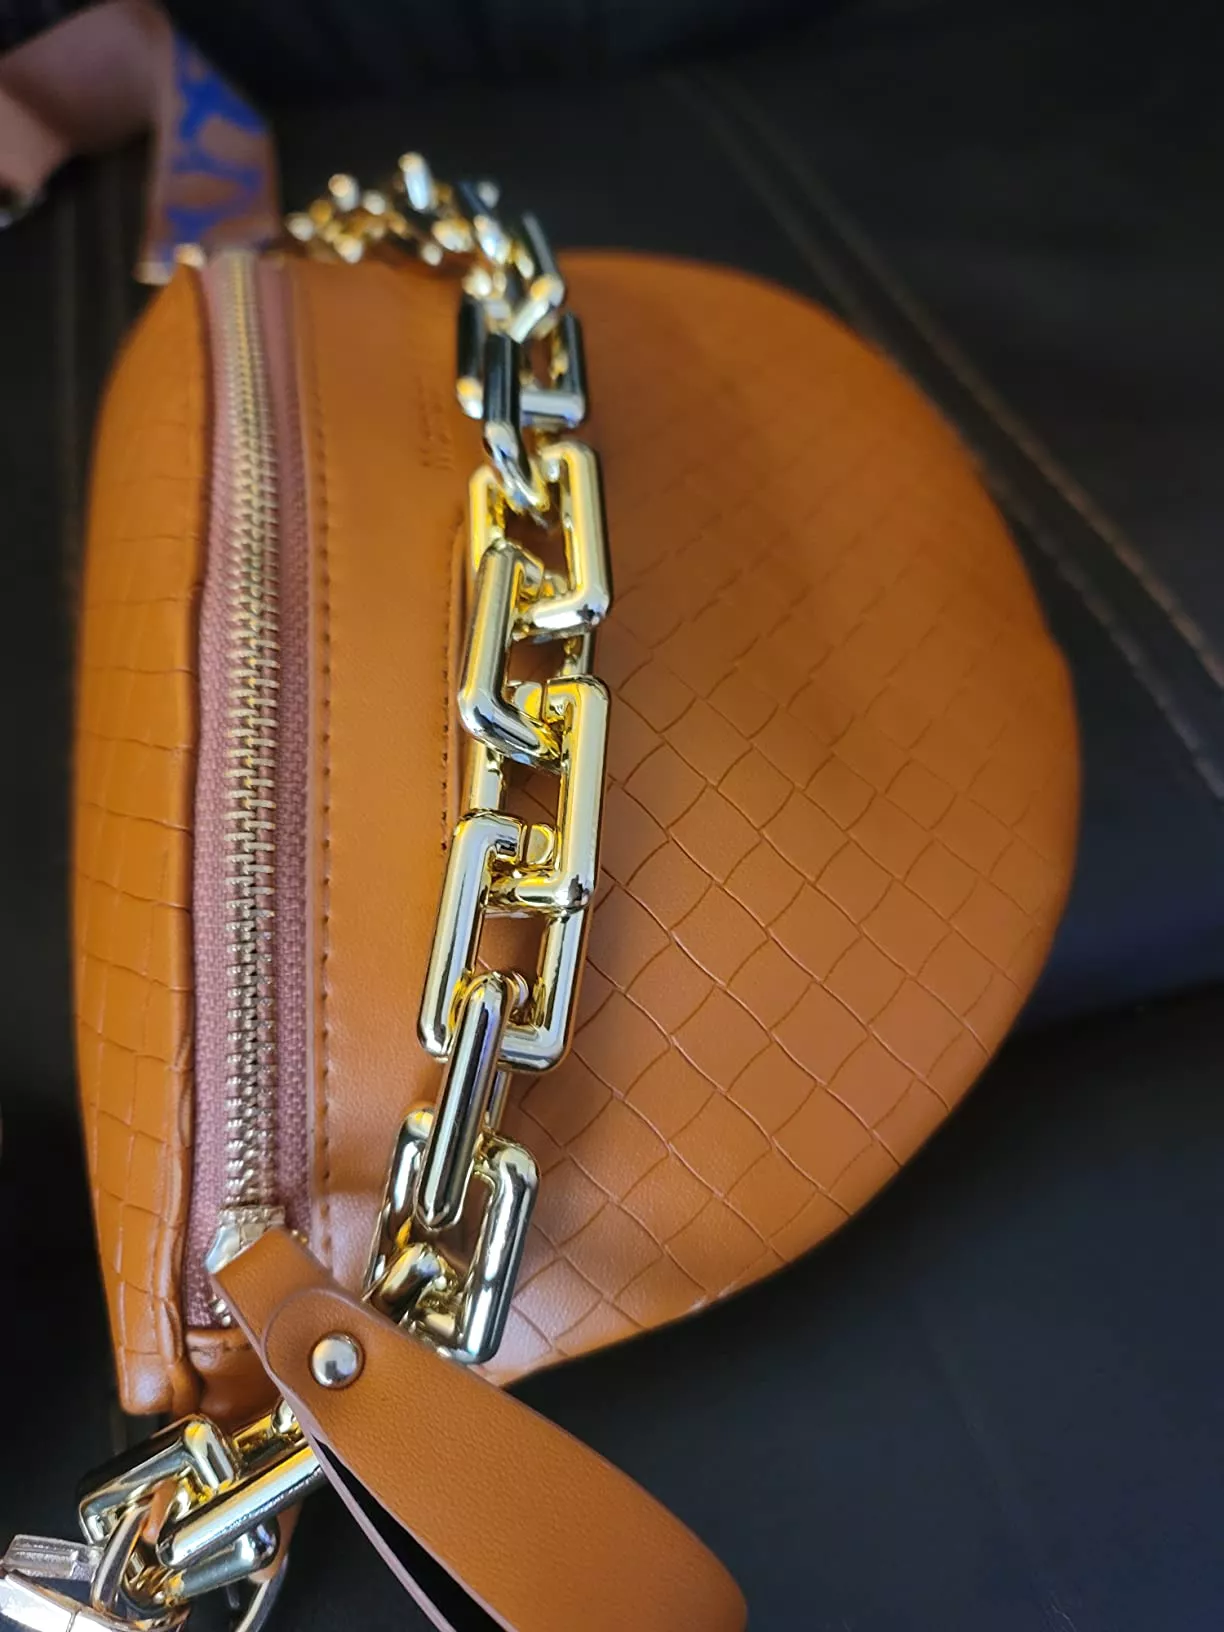 Thick Chain Women's Fanny Pack Plaid leather Waist Bag Shoulder